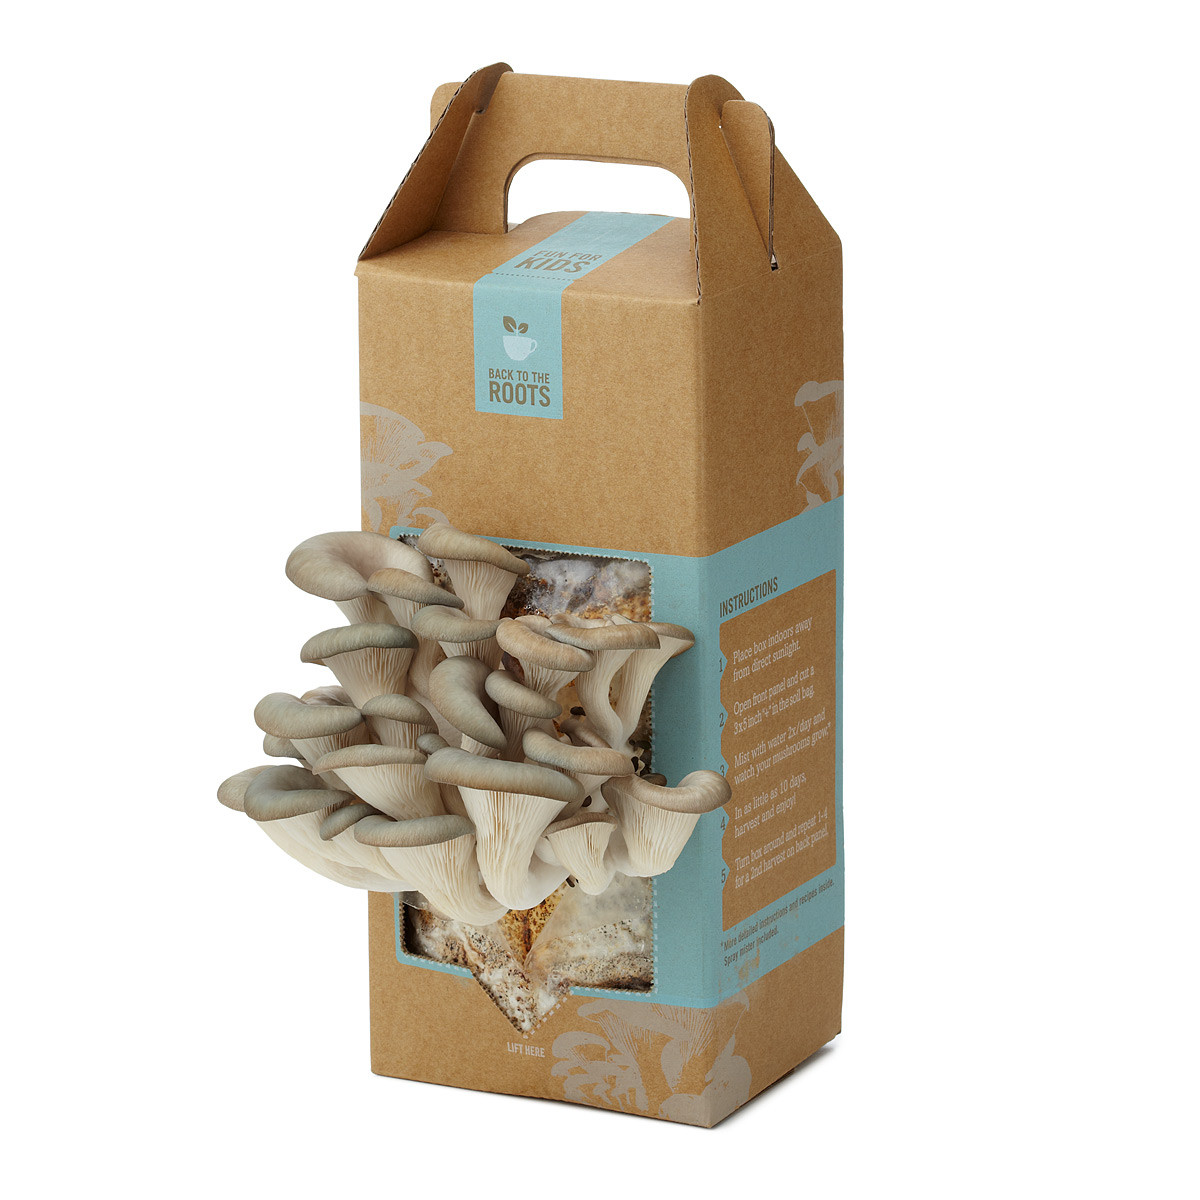 Best ideas about DIY Mushroom Kit
. Save or Pin Mushroom Kit Now.